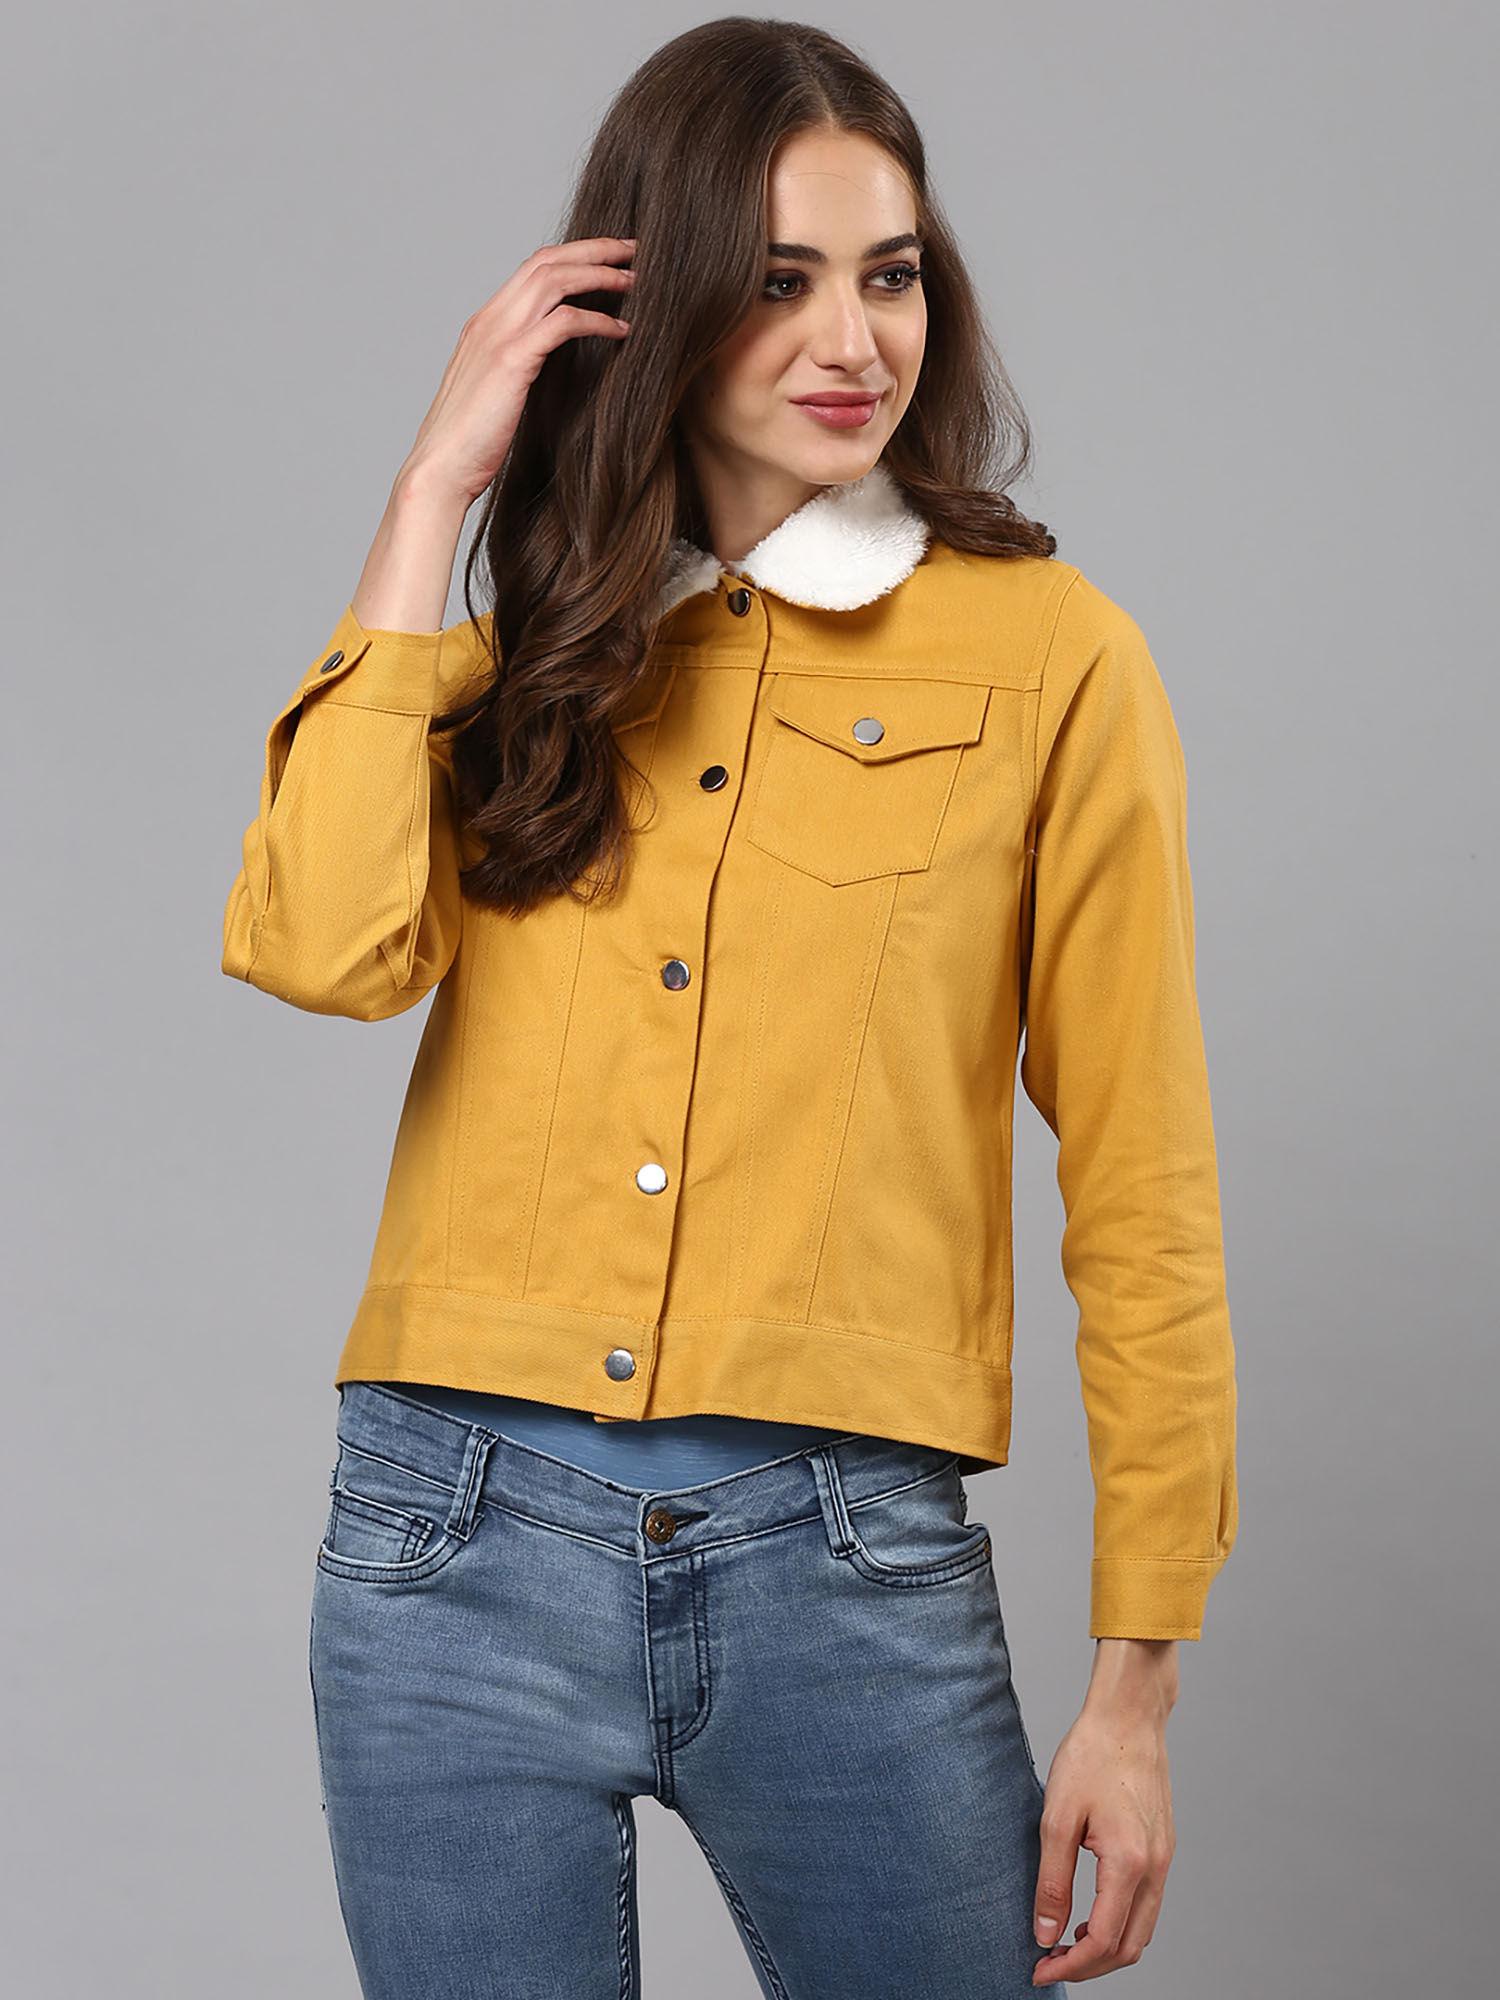 women yellow color jacket